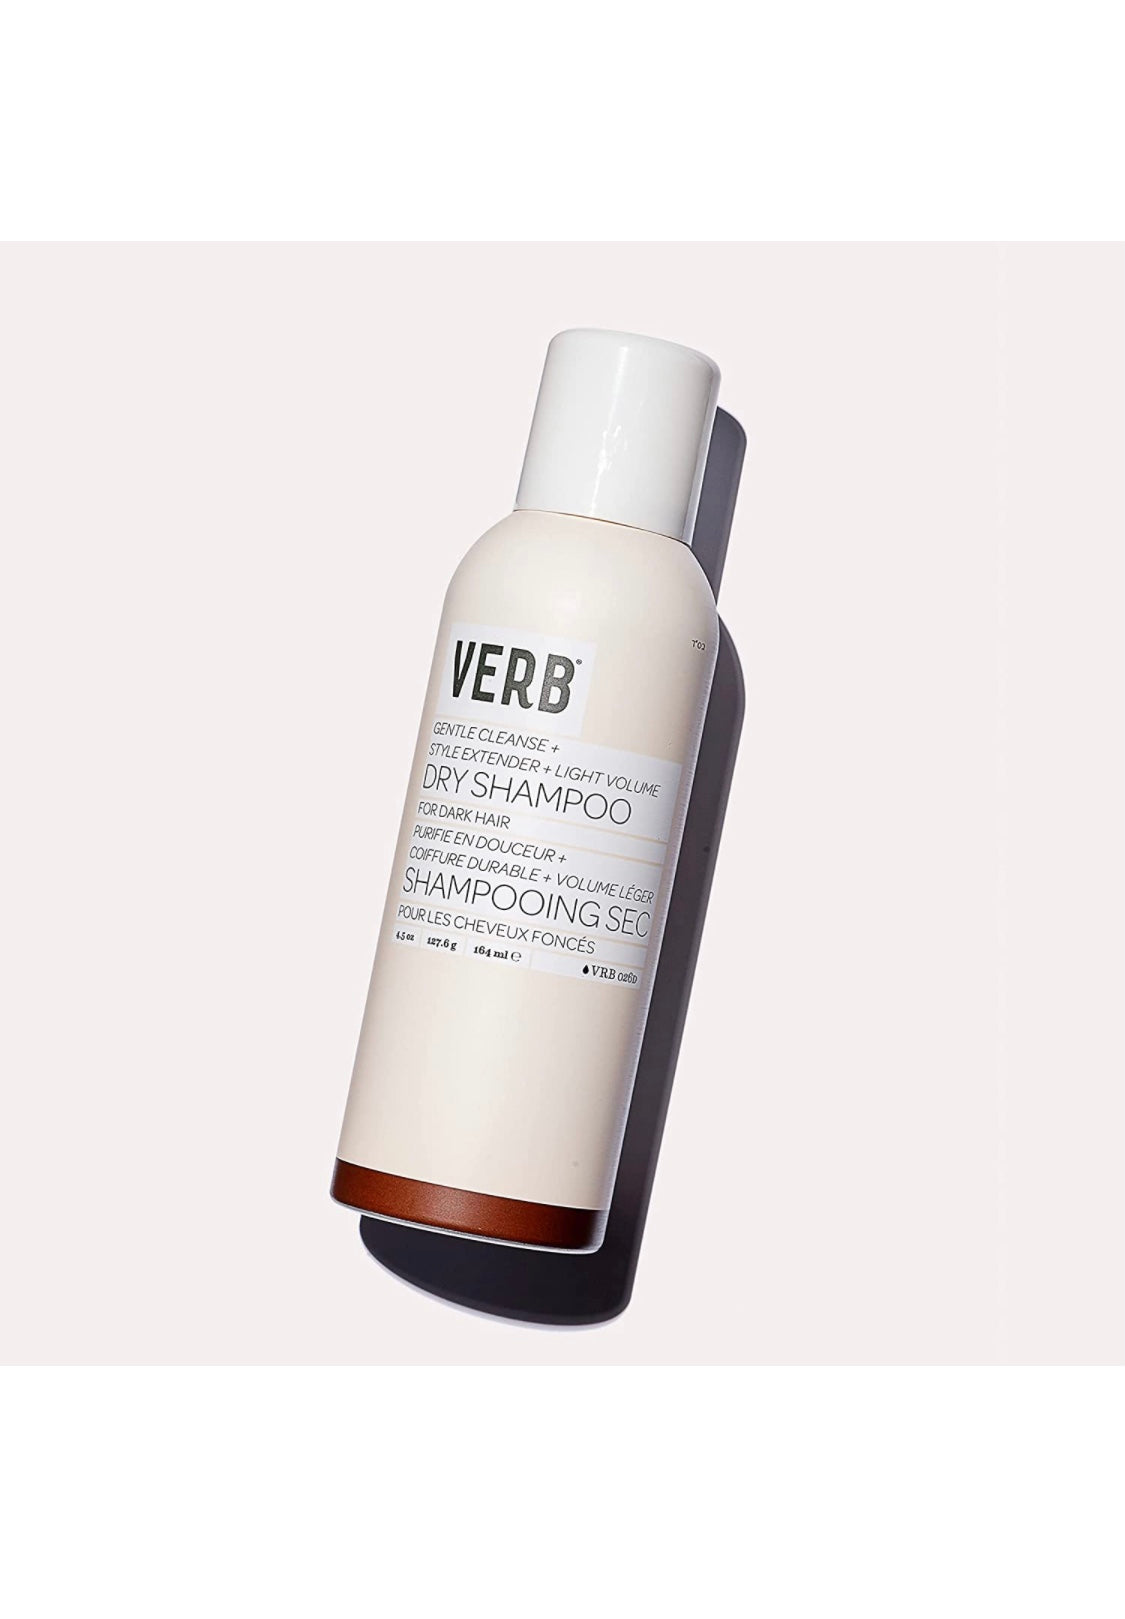 Verb - Dry shampoo ight volume For dark hair 4.5 fl. oz./ 164 ml